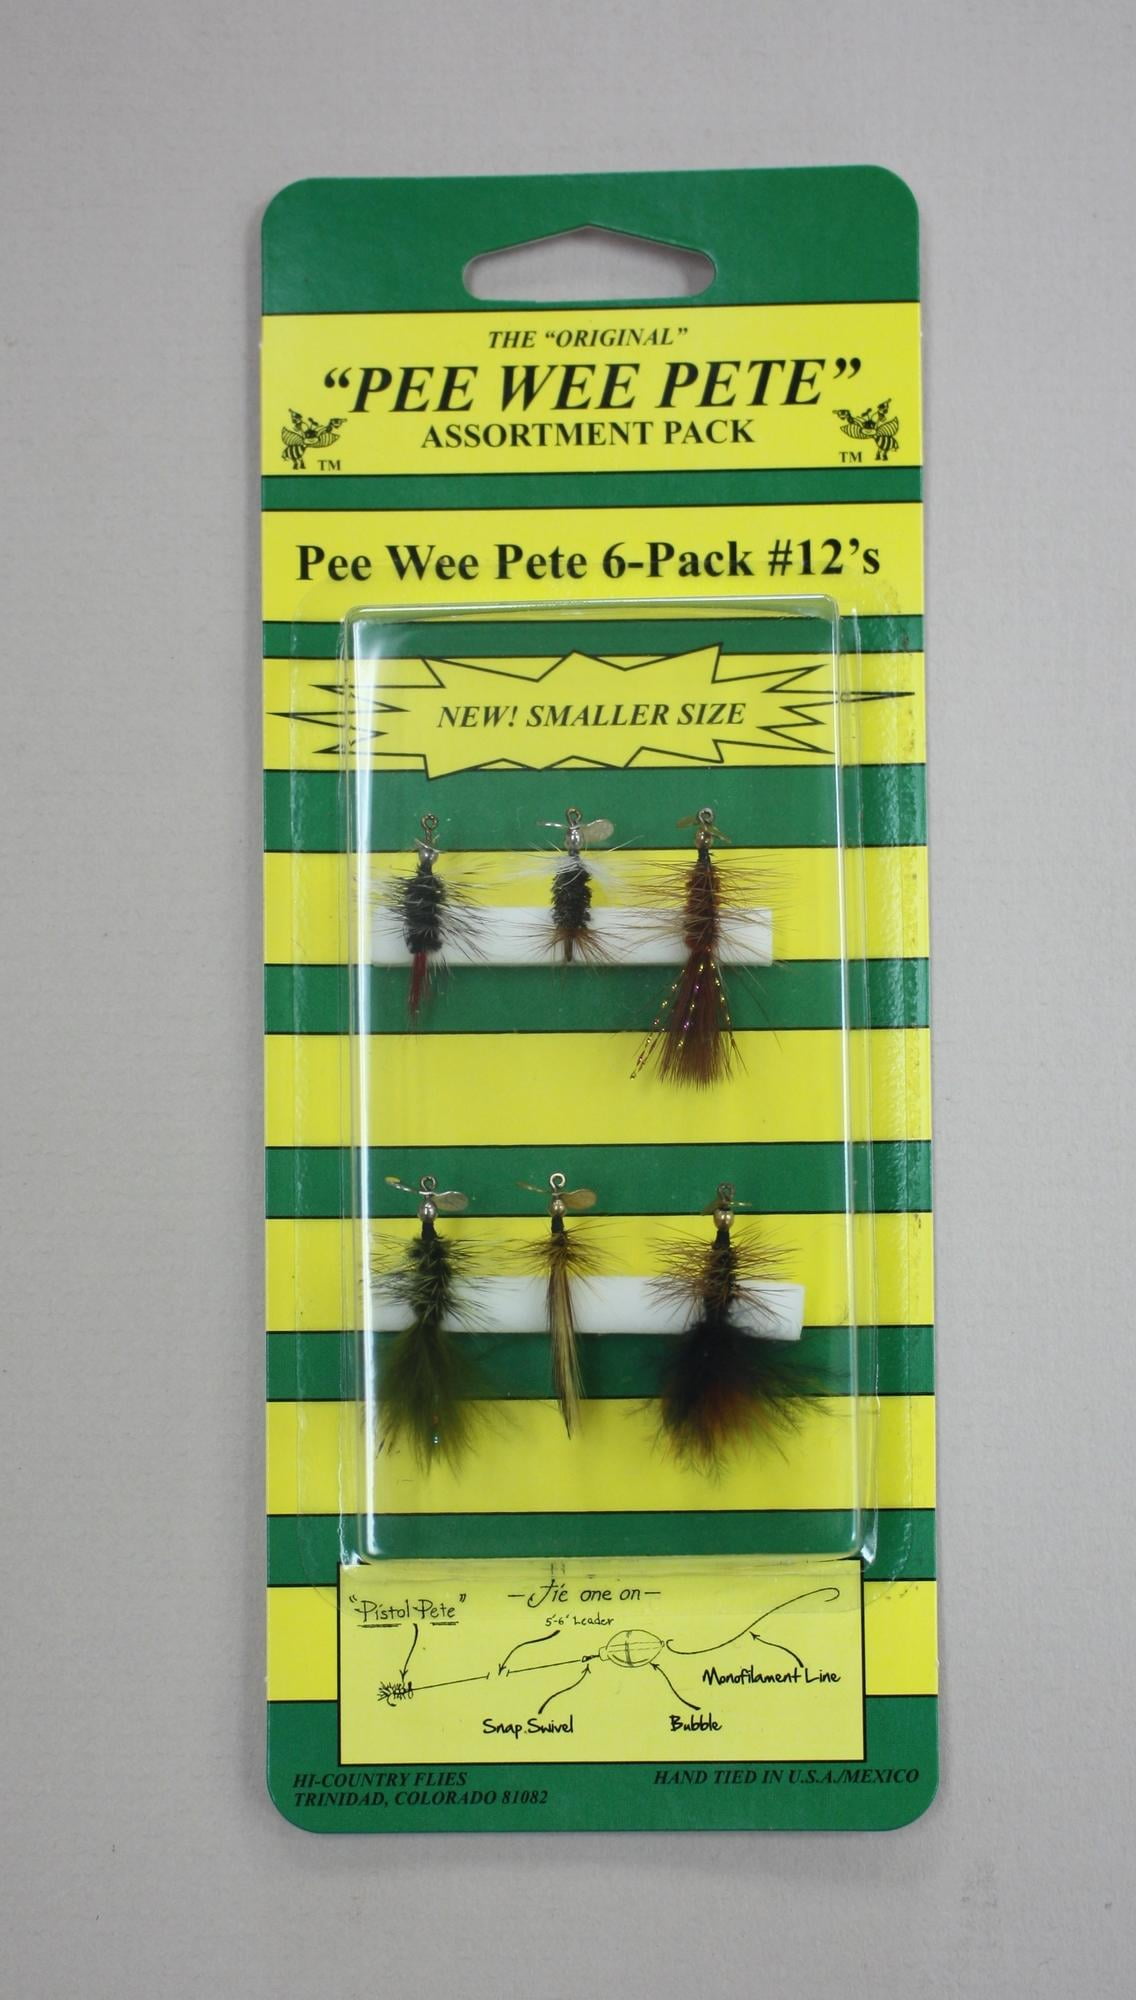 Pistol Pete Pee Wee Pete Size 12 - Pack of 6